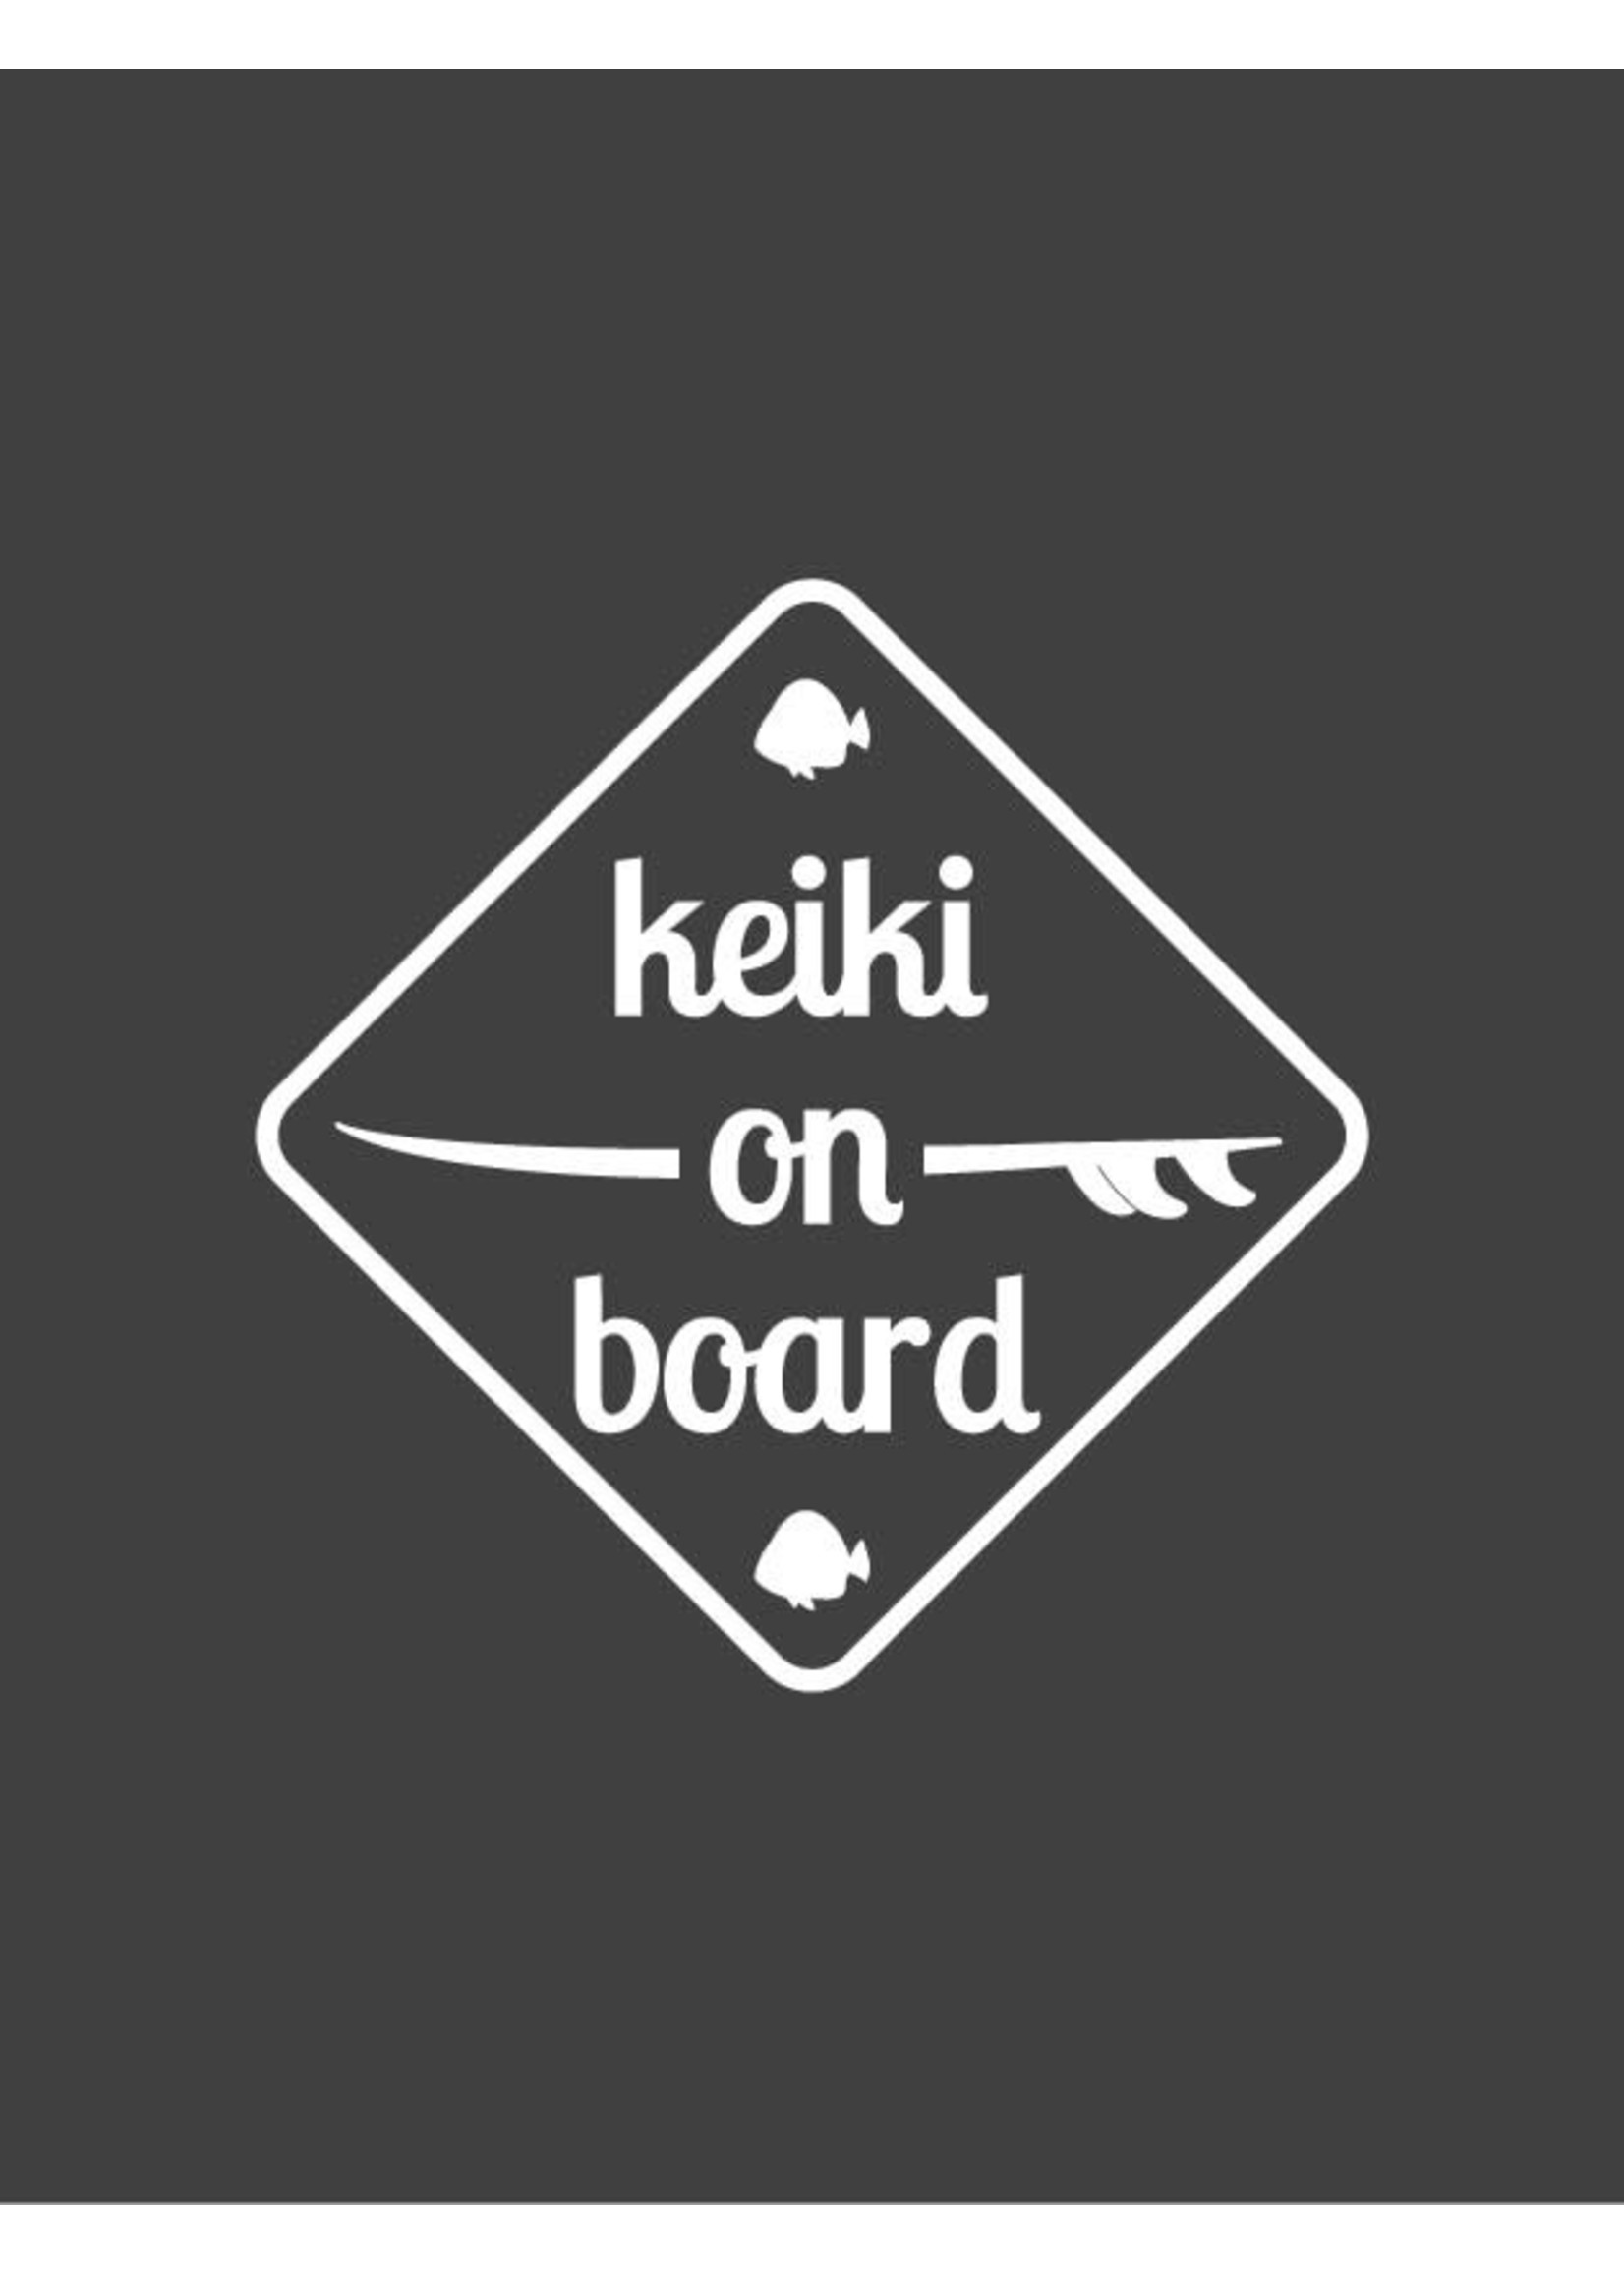 keiki on board - sticker